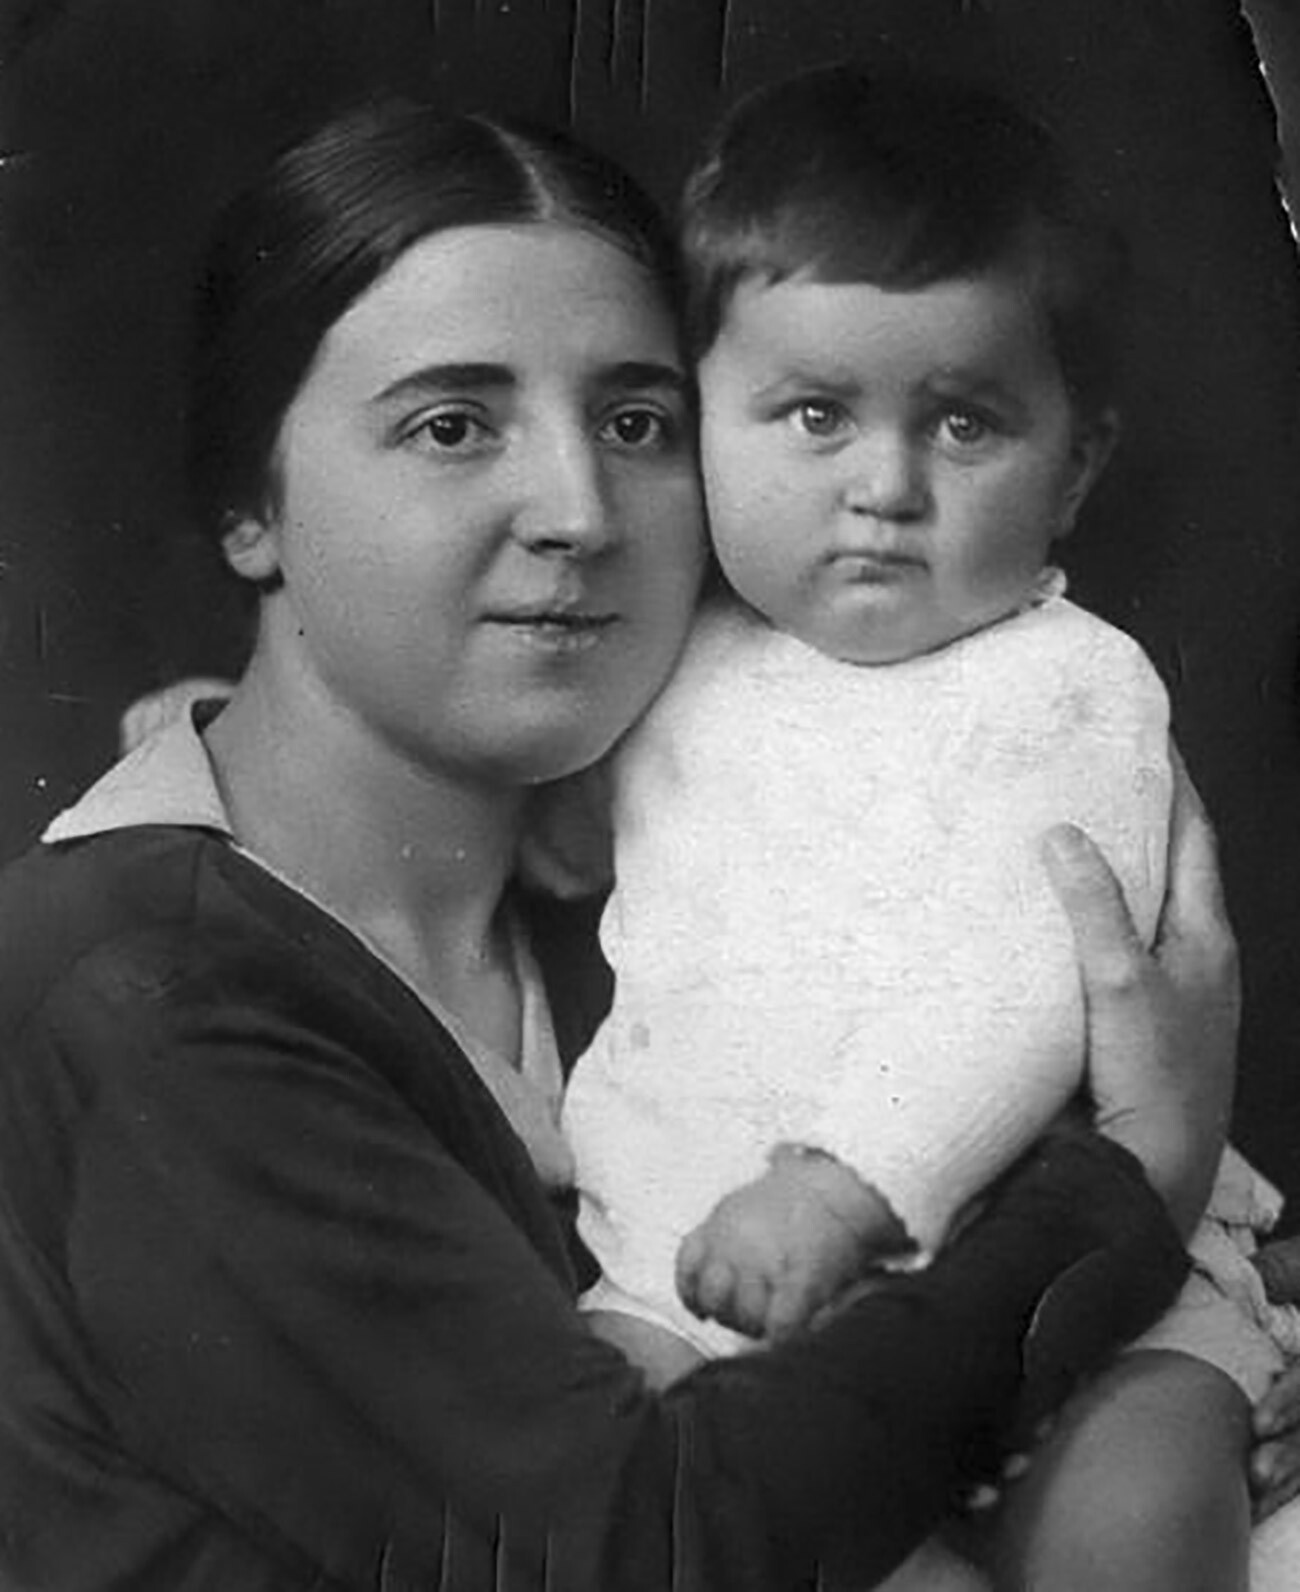 Nadezhda Alliluyeva with her son Vasily